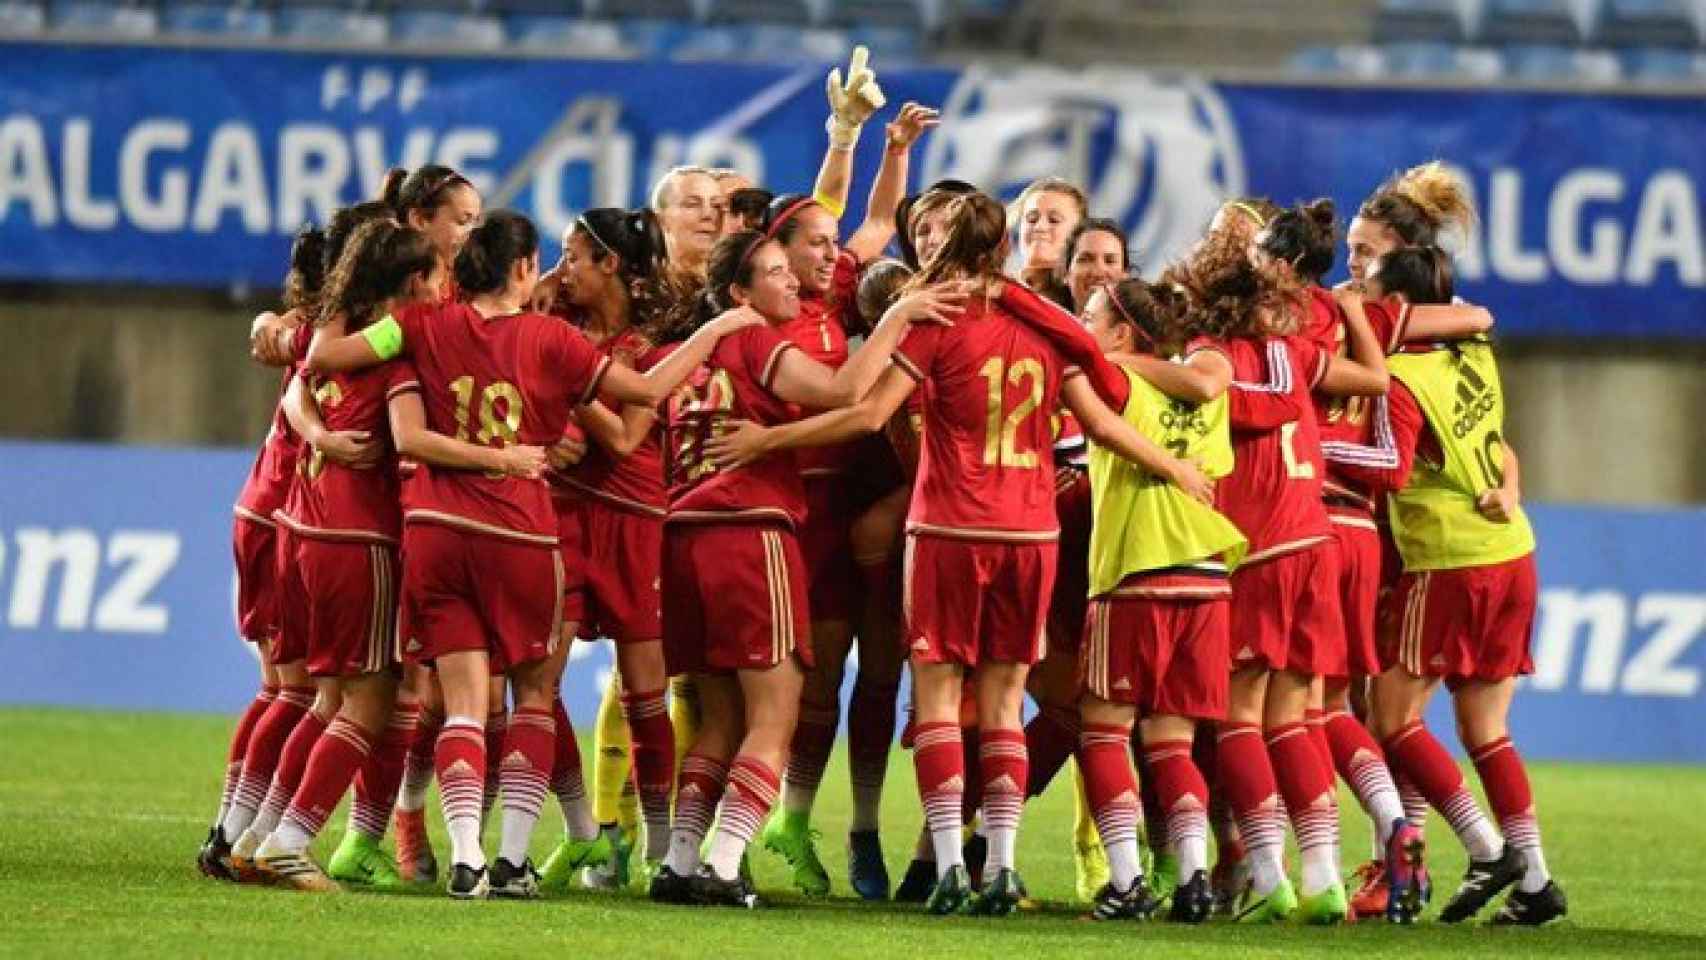 La selección española femenina celebrando un gol. Foto: Twitter (@teledeporte)